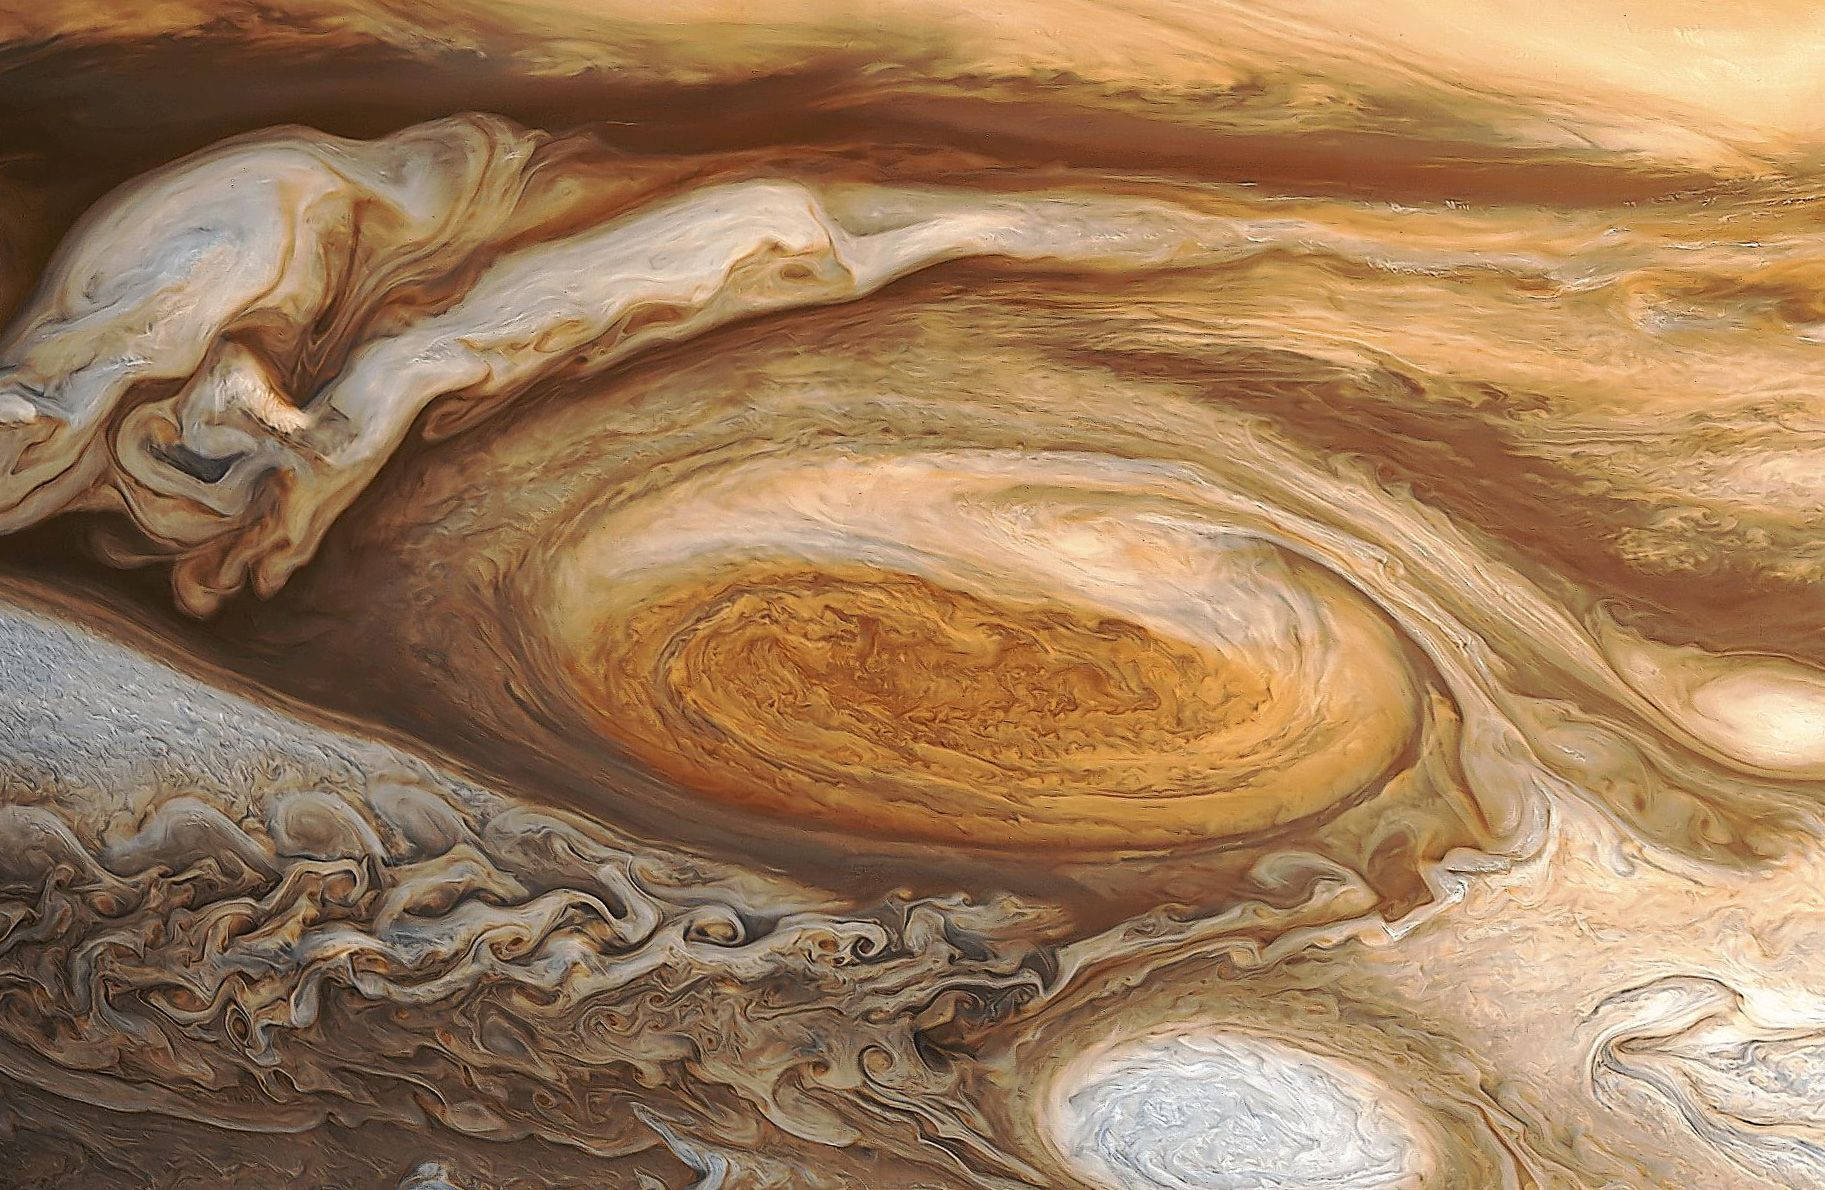 Jupiter 1825X1190 Wallpaper and Background Image